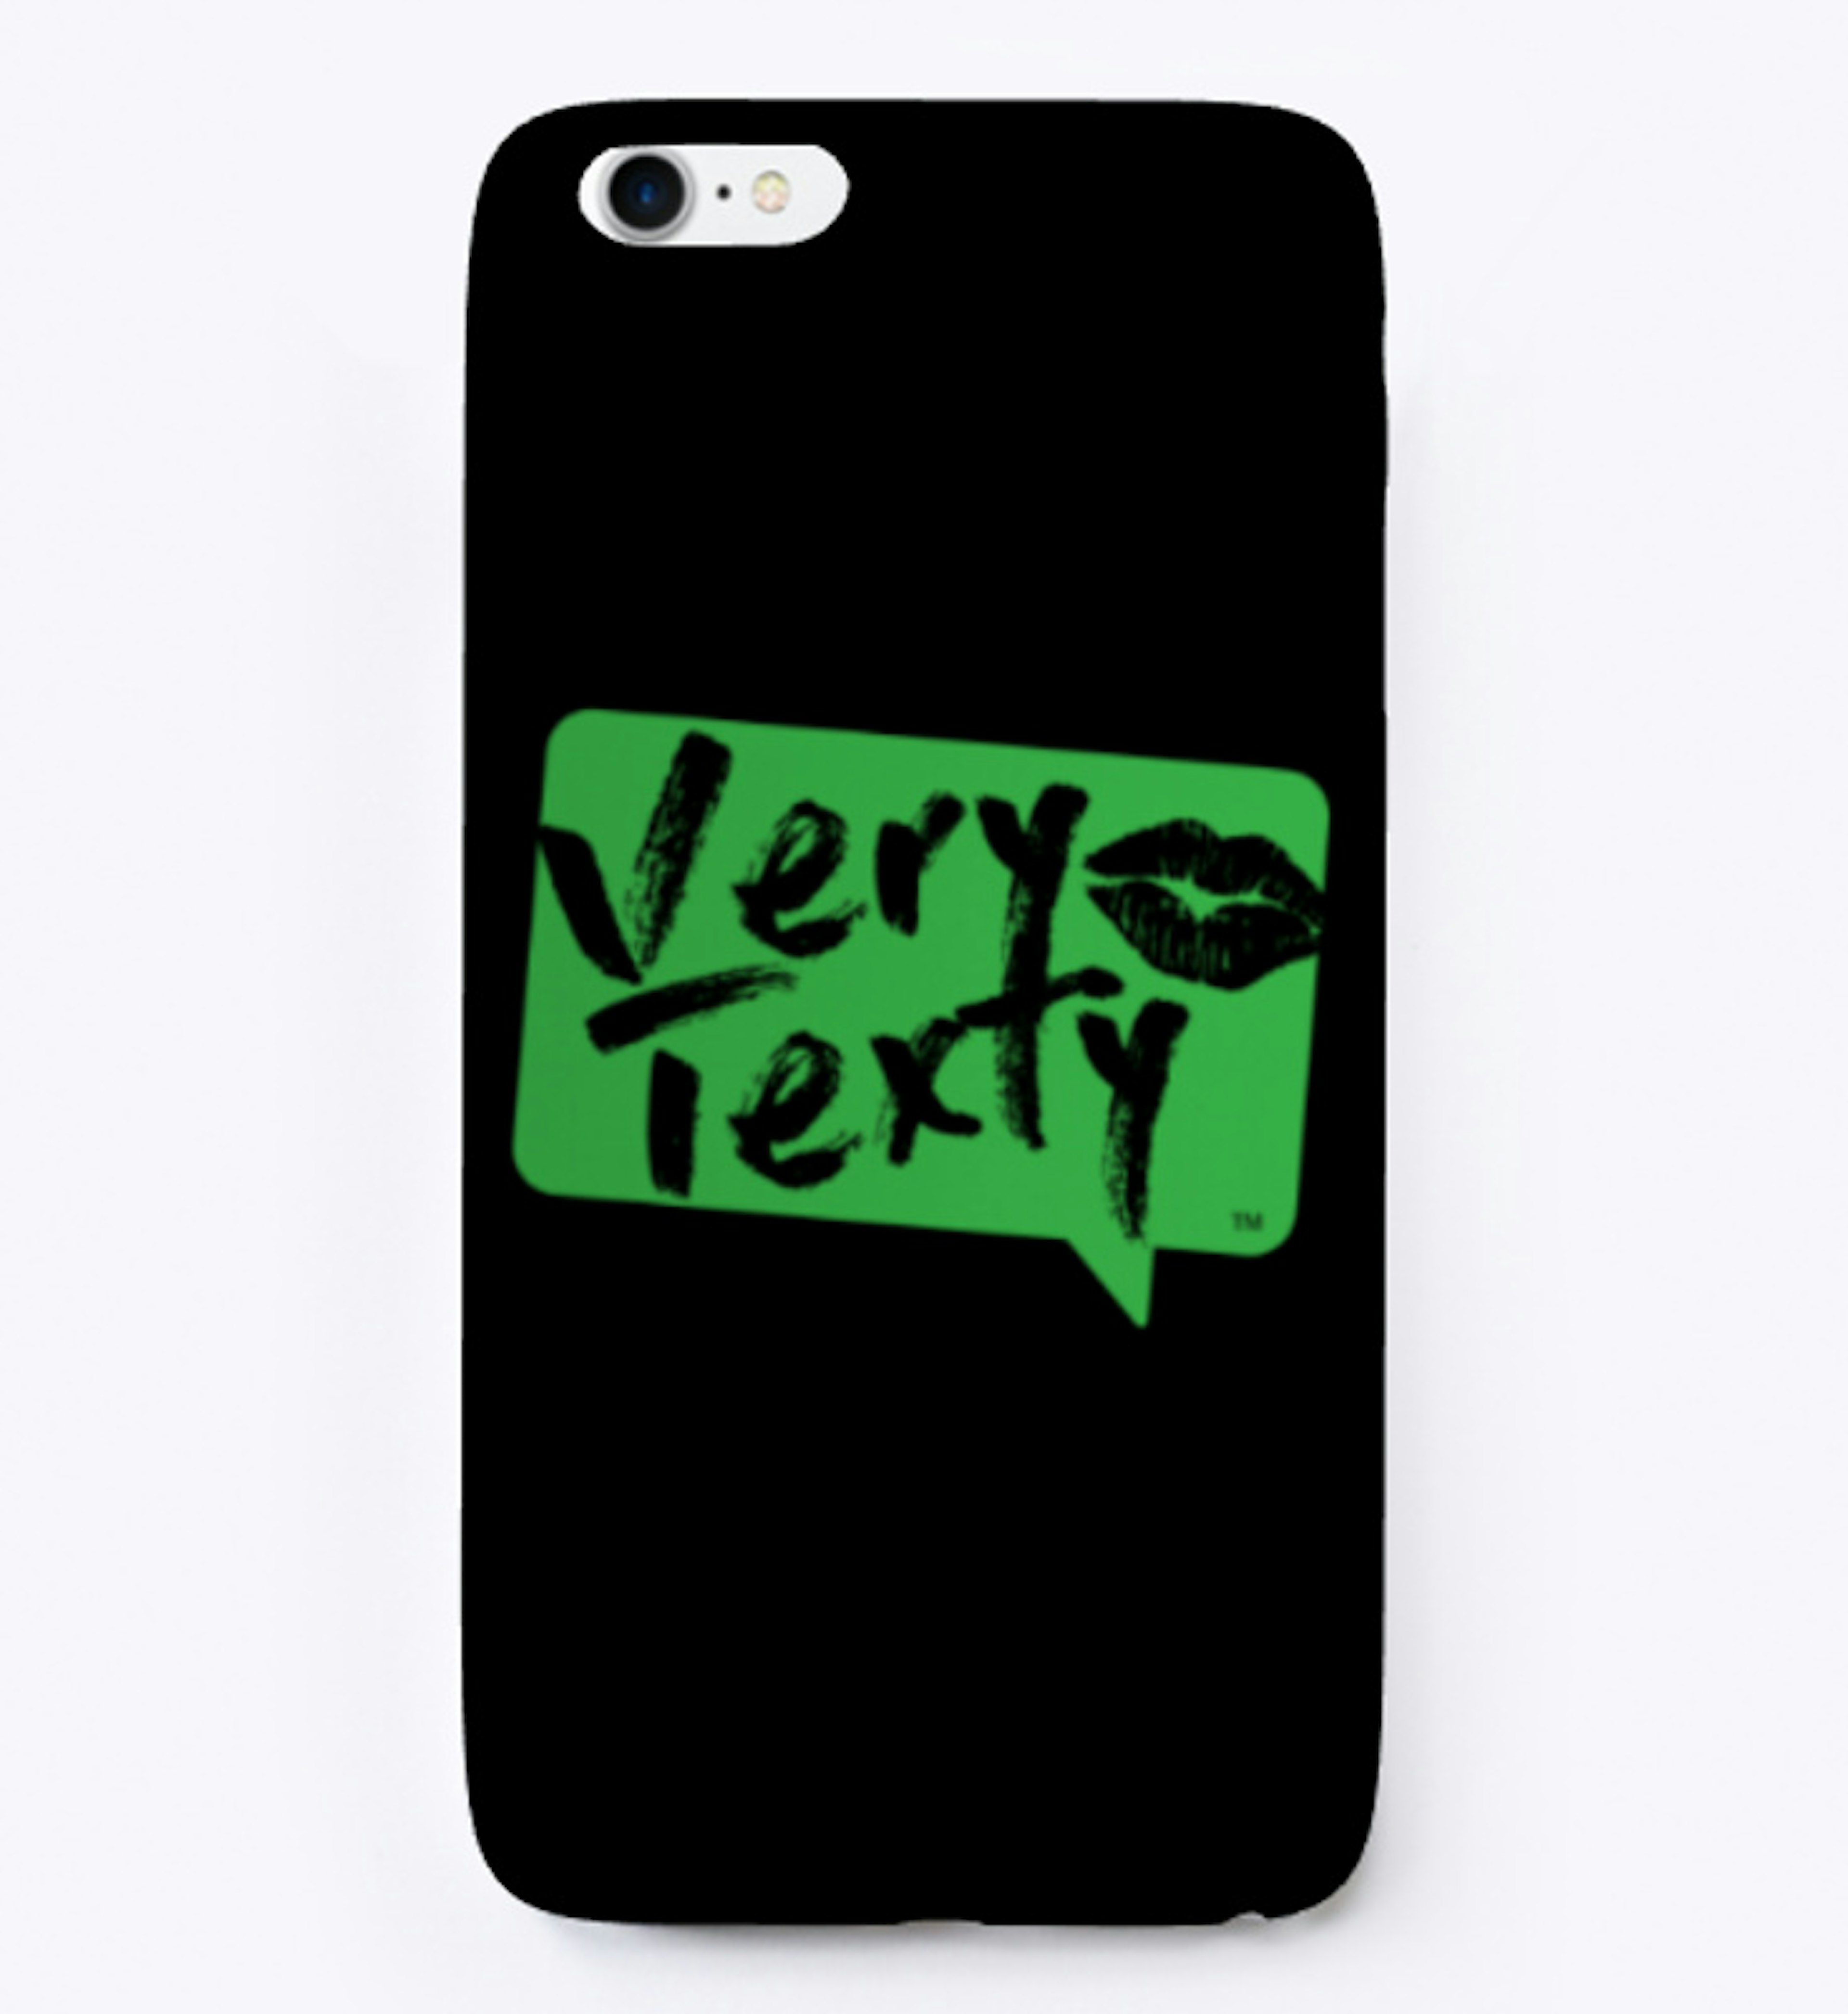 Very Texty Phone Case 